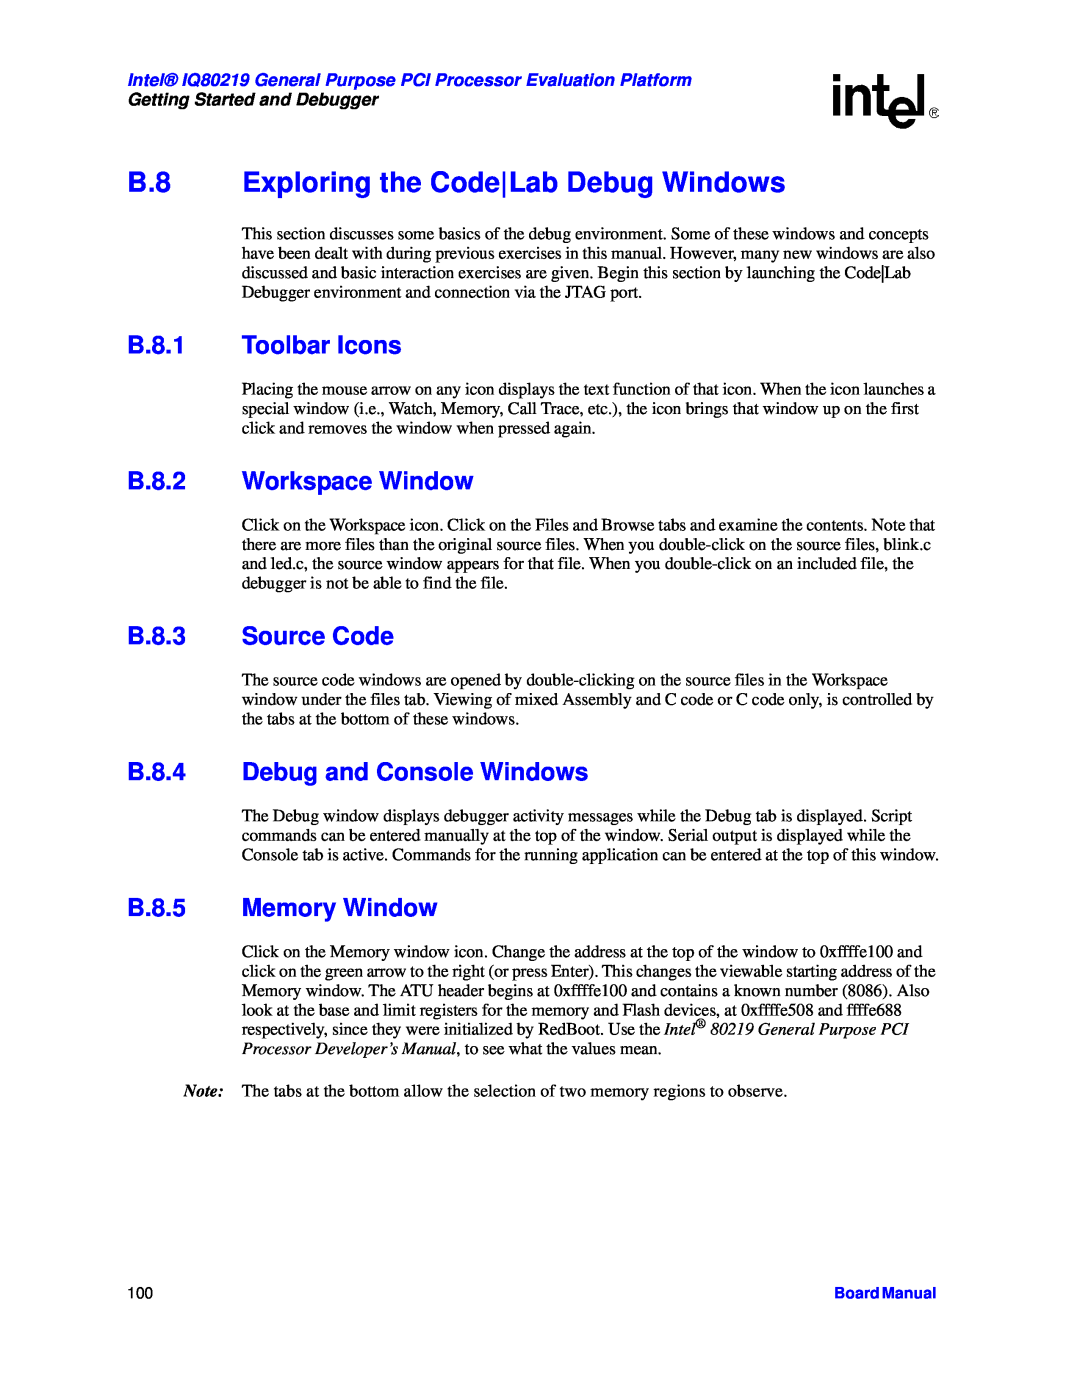 Intel IQ80219 B.8 Exploring the CodeLab Debug Windows, B.8.1 Toolbar Icons, B.8.2 Workspace Window, B.8.3 Source Code 